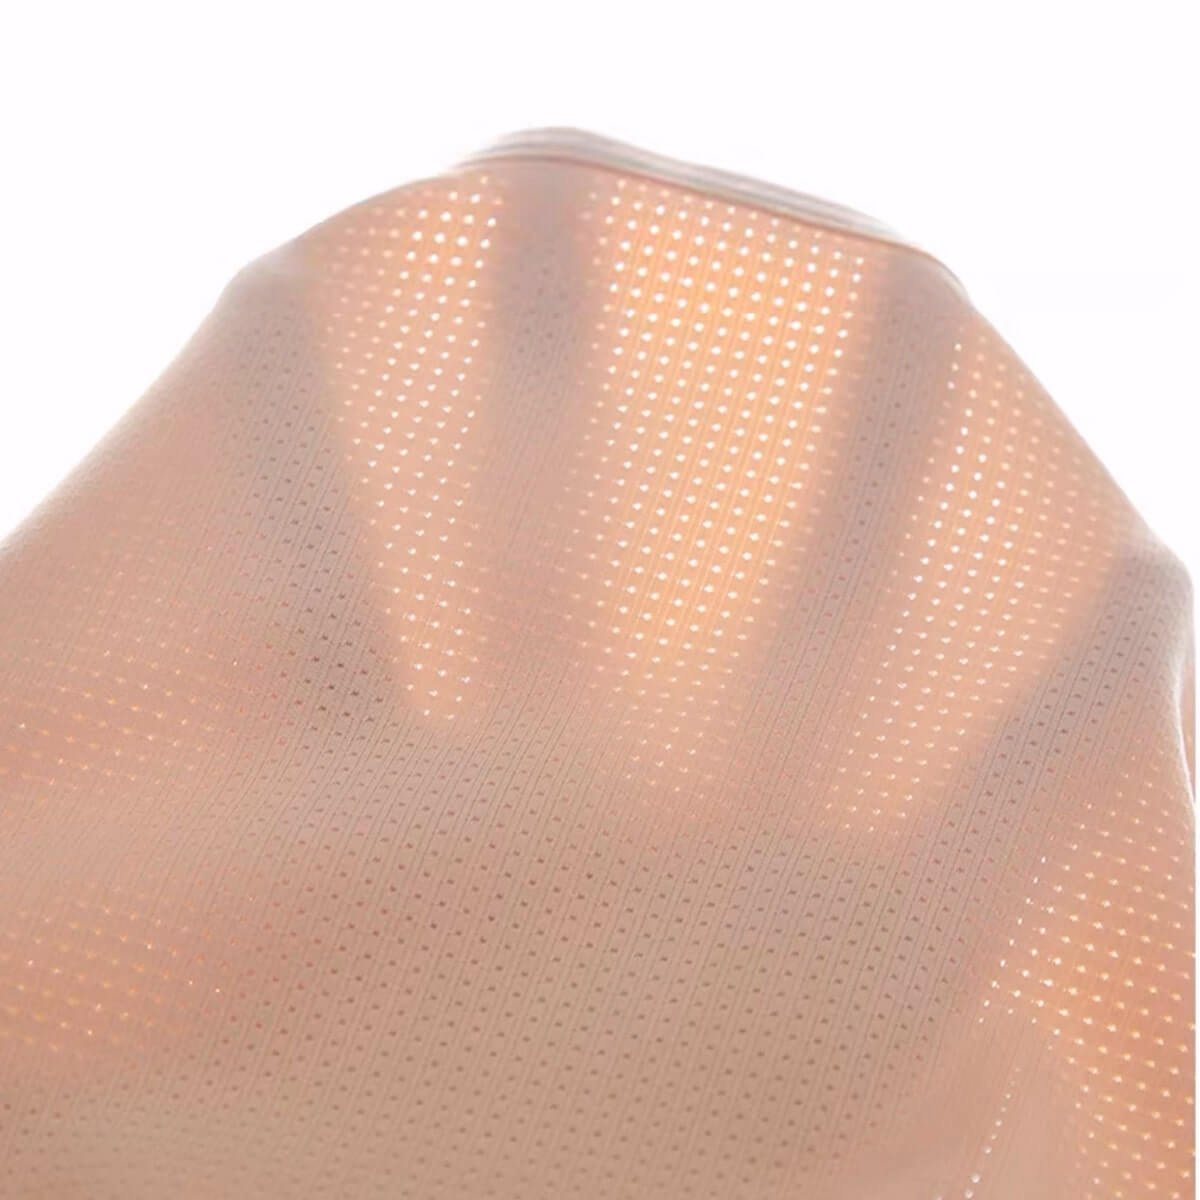 Ice Silk Front Closure Compression Bra for Breast Reduction